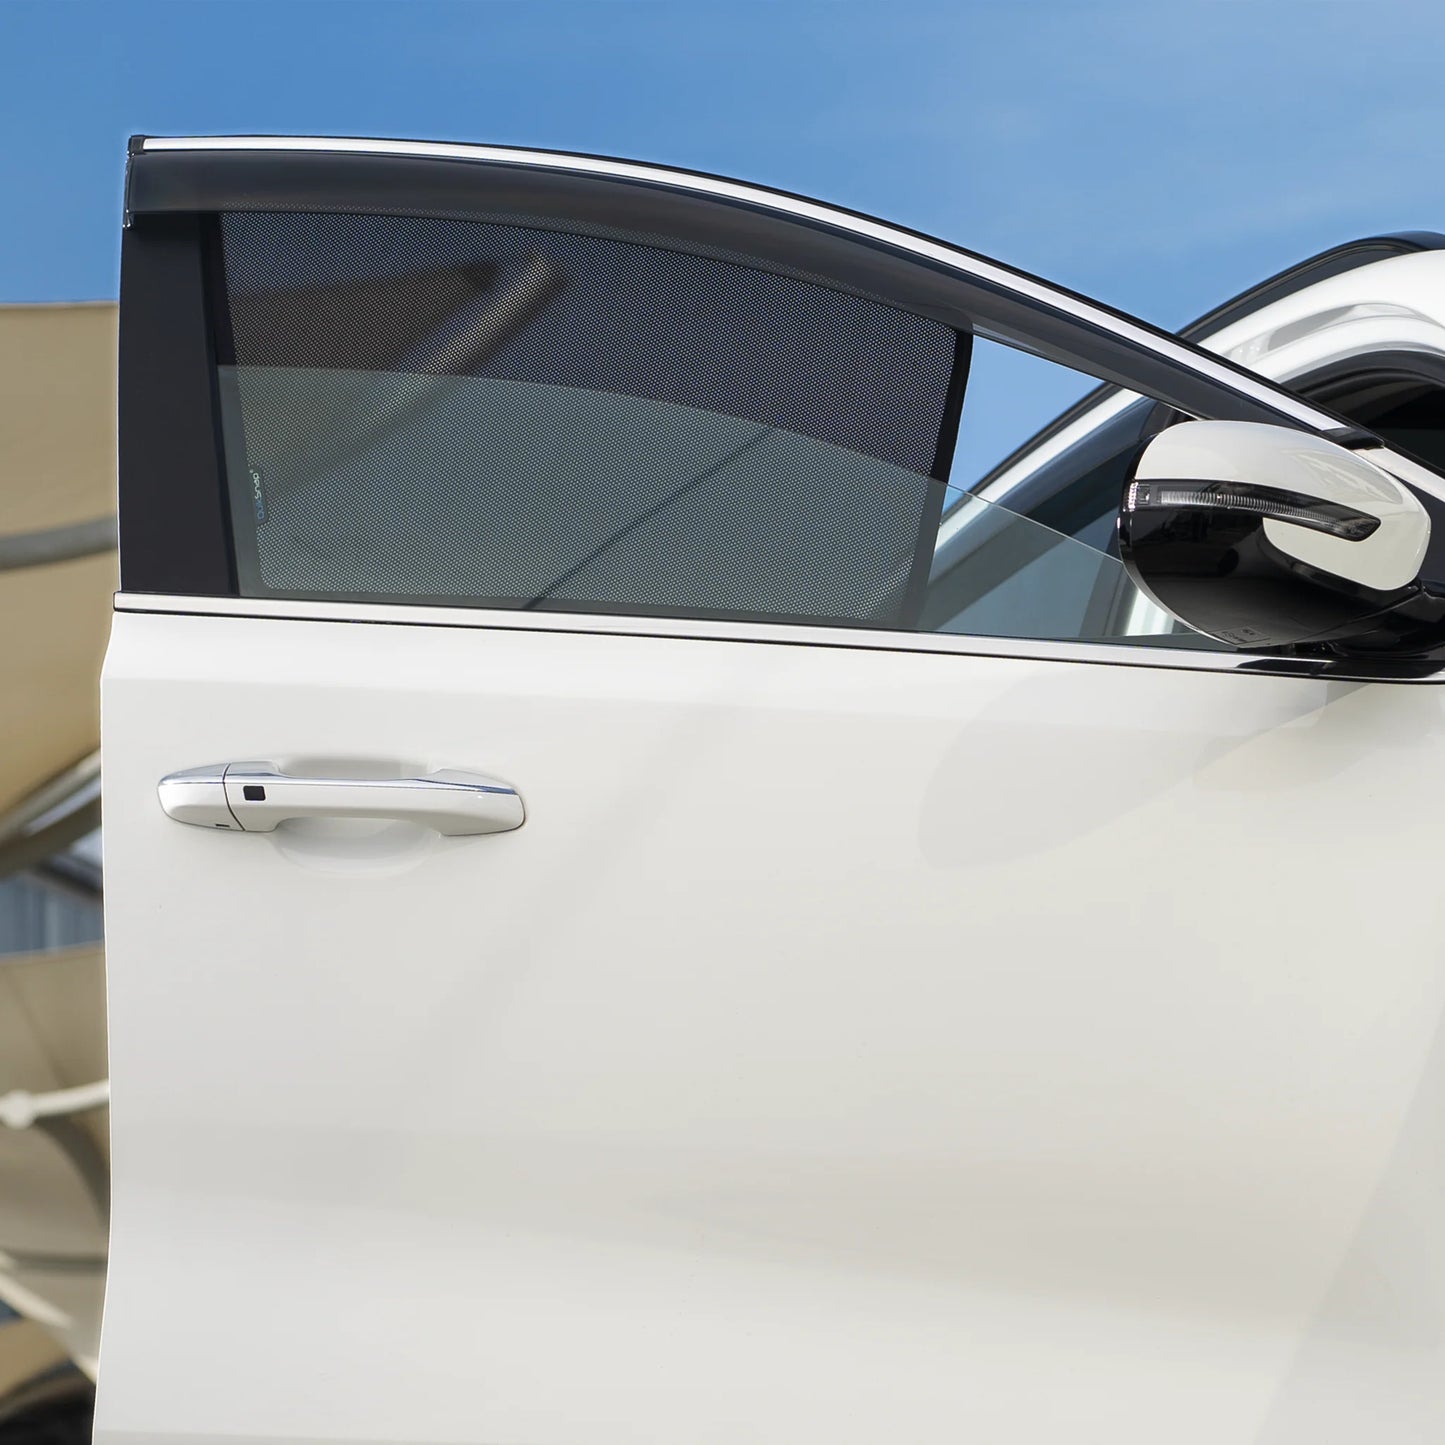 Quik Snap Window Sun Shades (Car Pardy) For Toyota Corolla Sedan 2009-2013: Superior UV Protection & Custom Fit